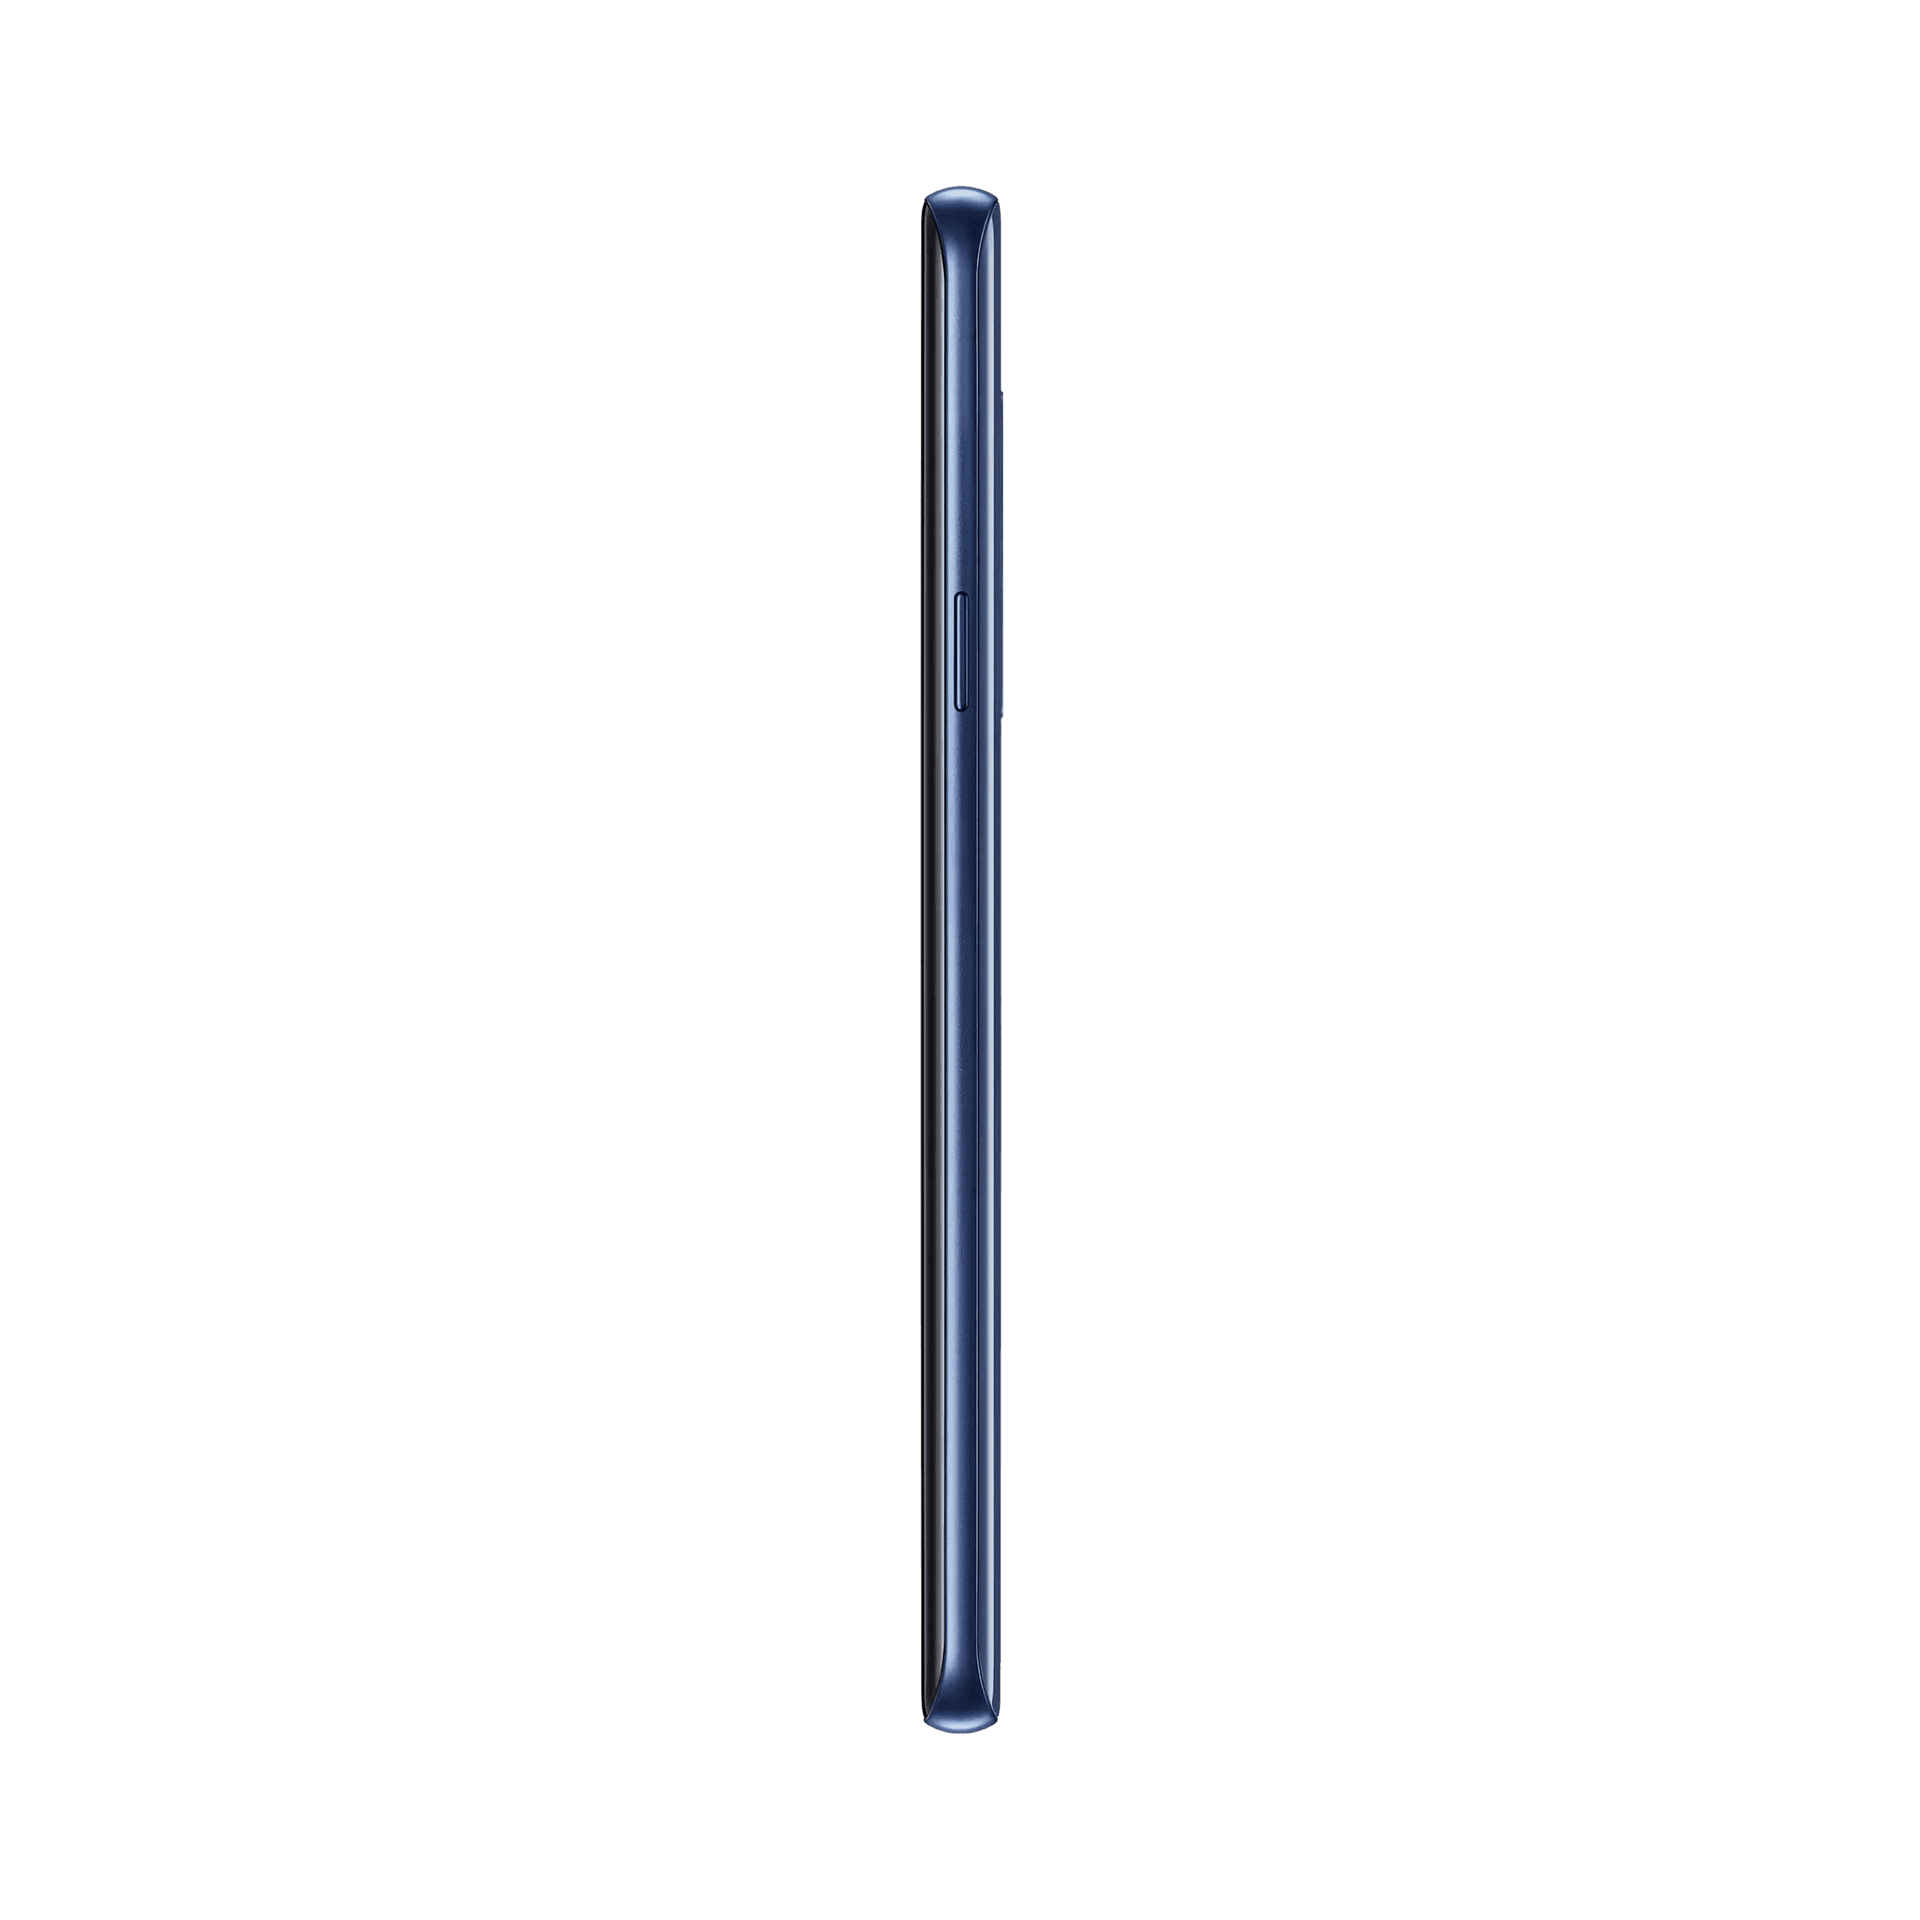 Samsung Galaxy S9 - 64 GB - Mercan Mavisi